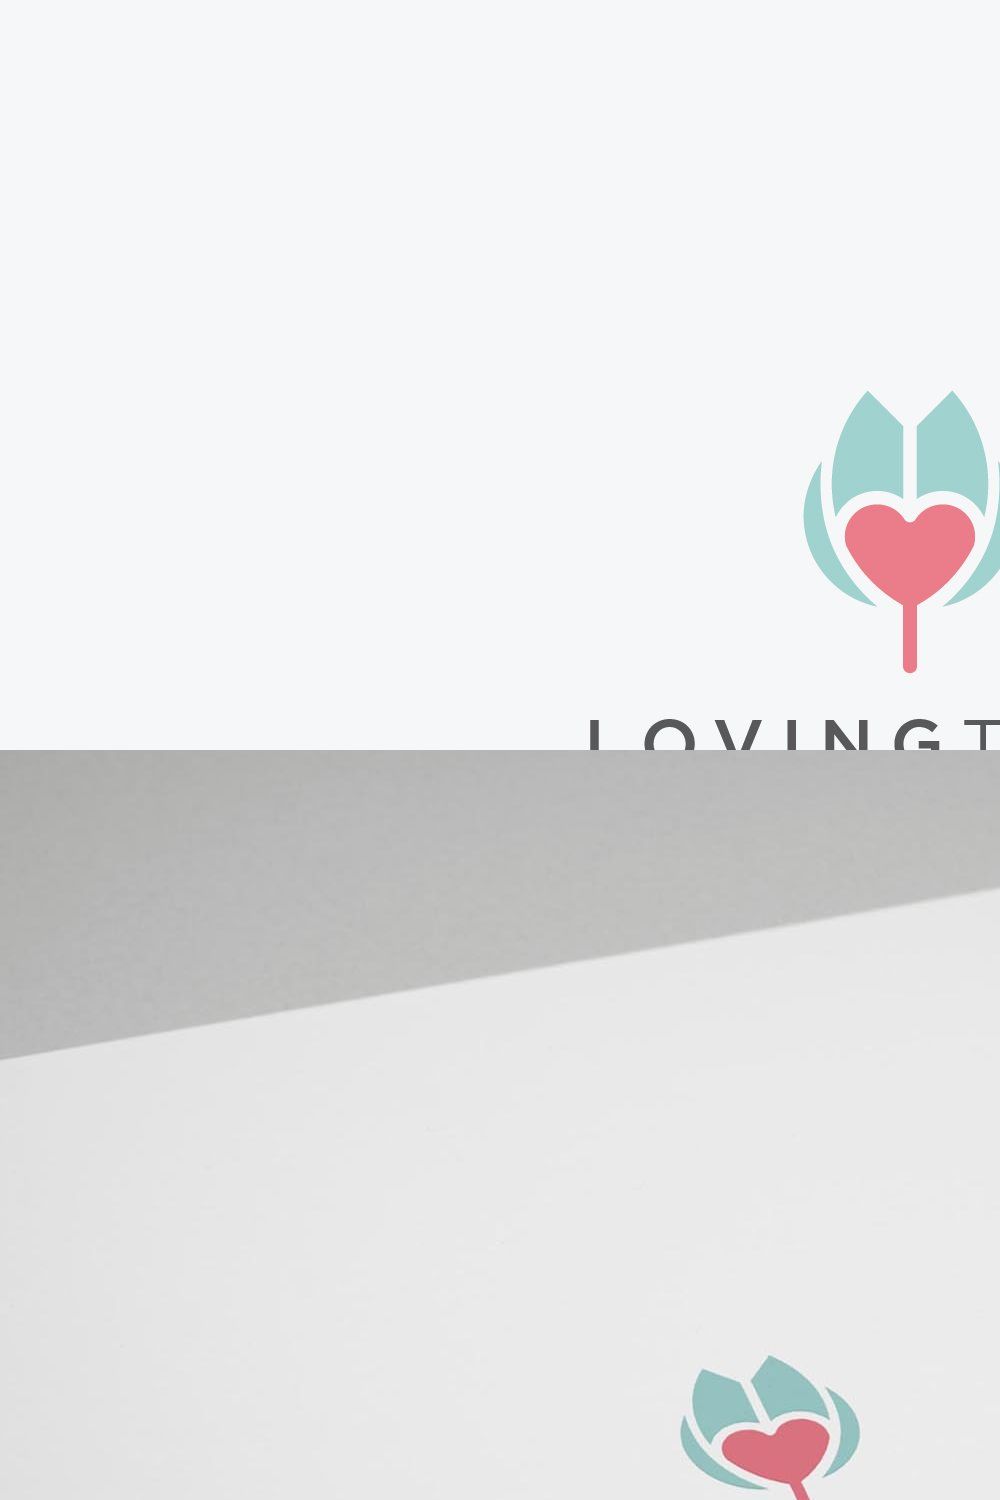 Loving Tulip Logo pinterest preview image.